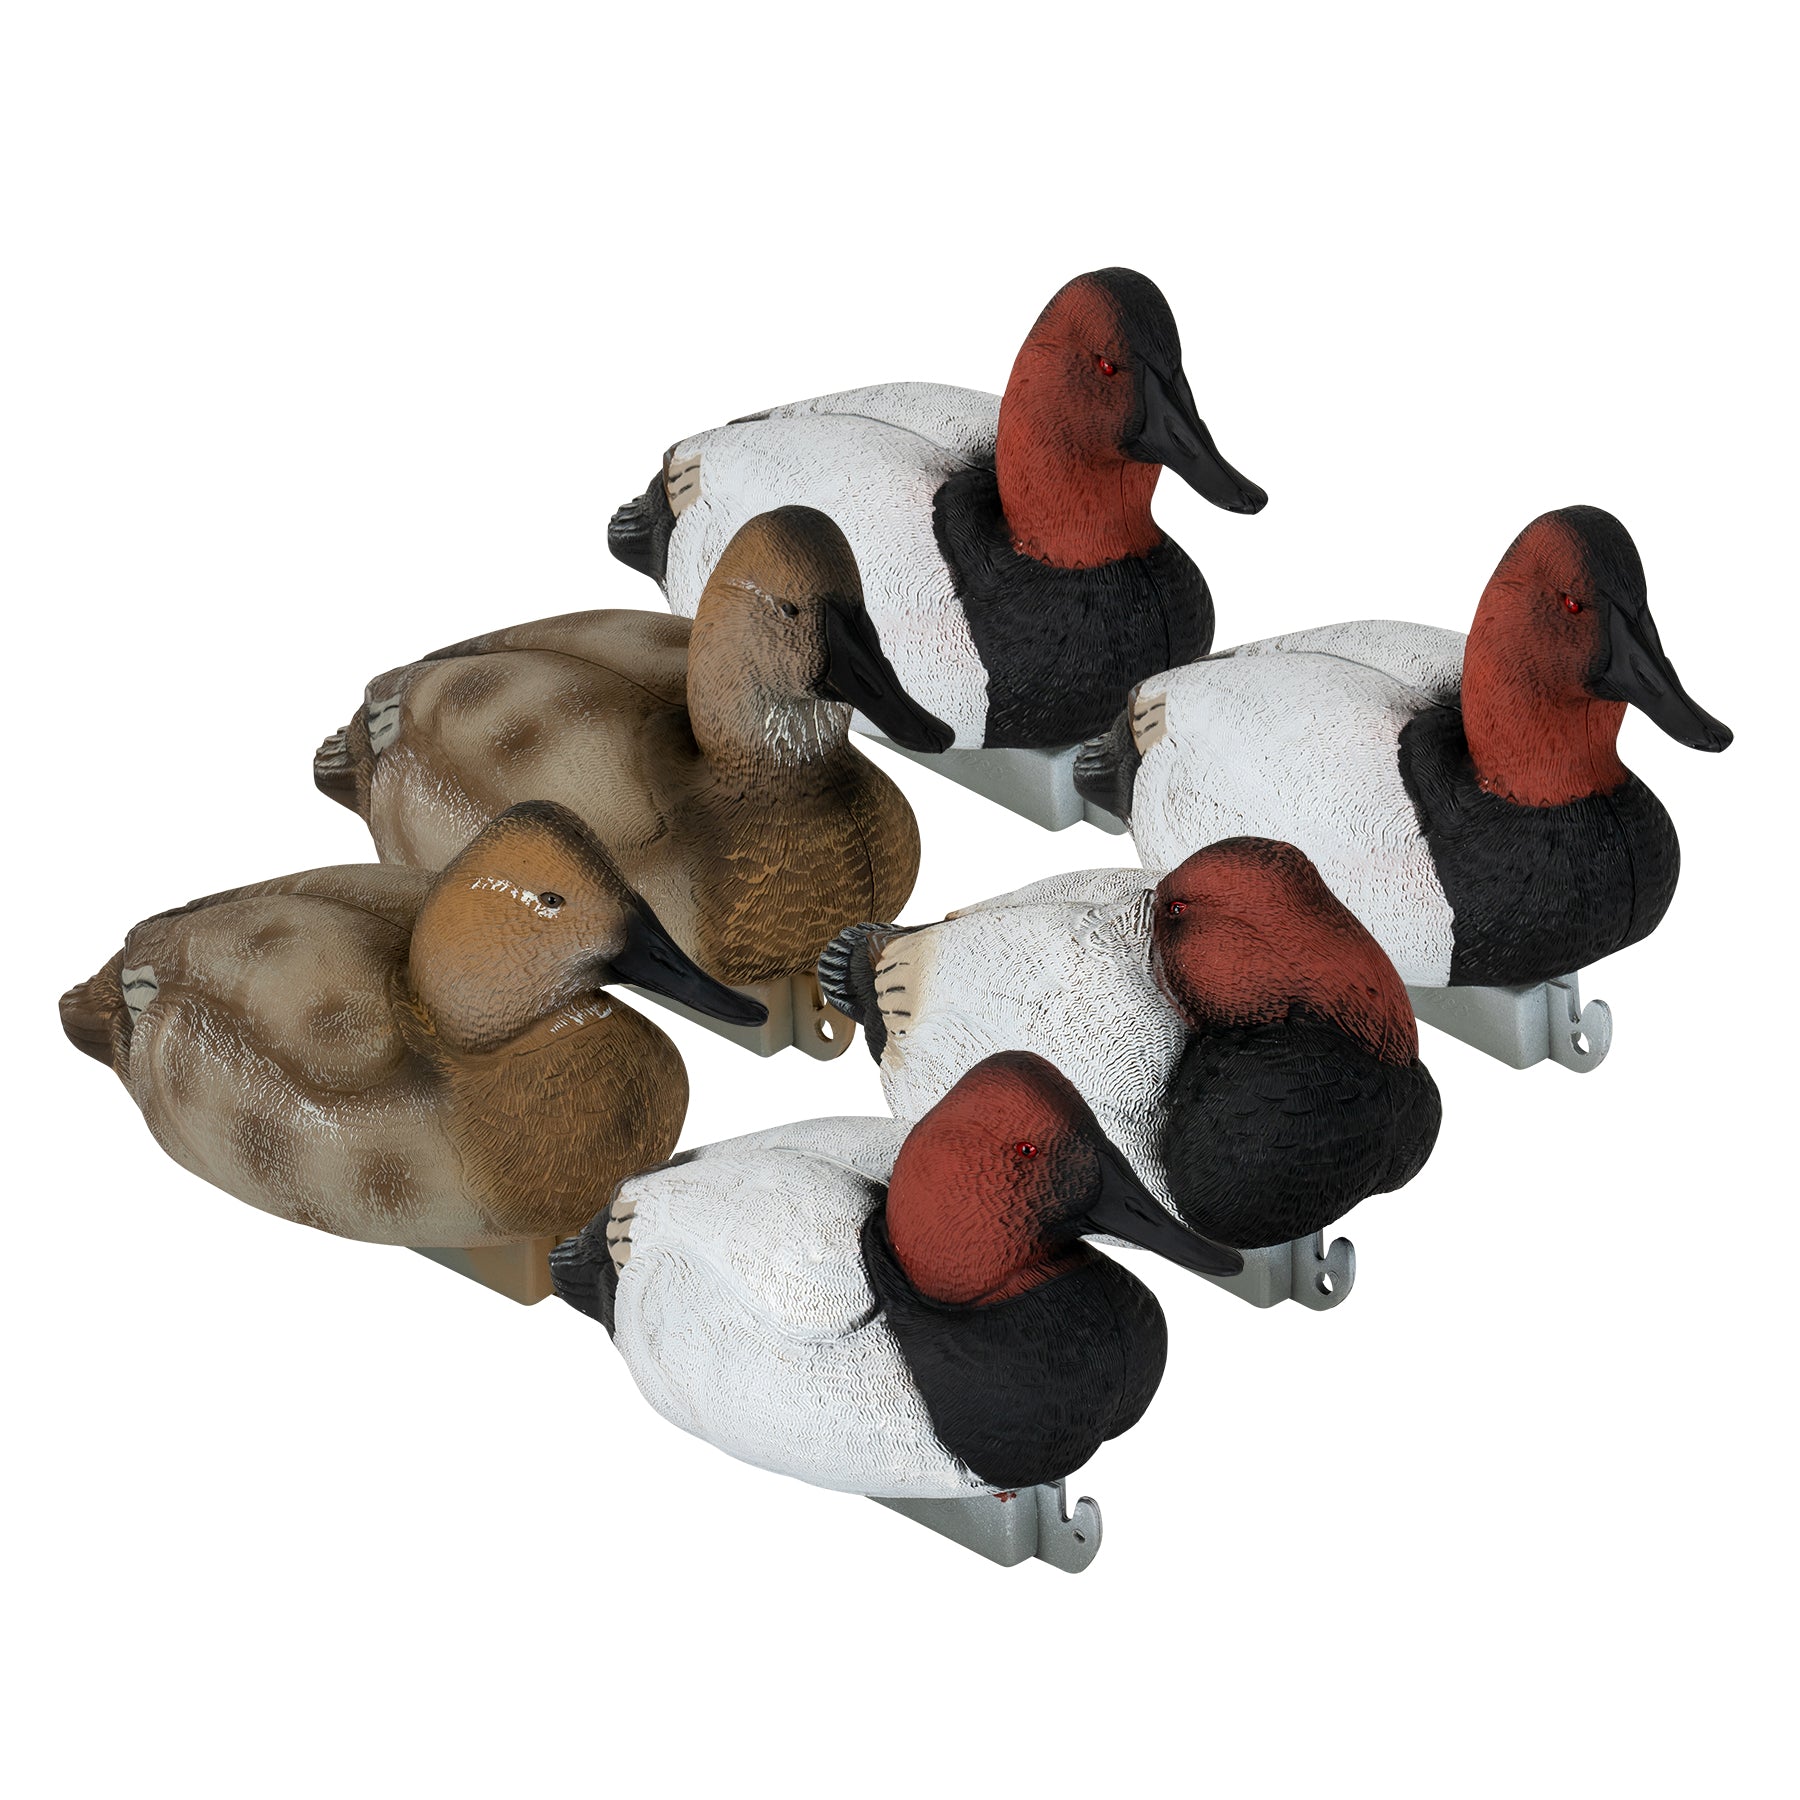 canvasback duck mounts